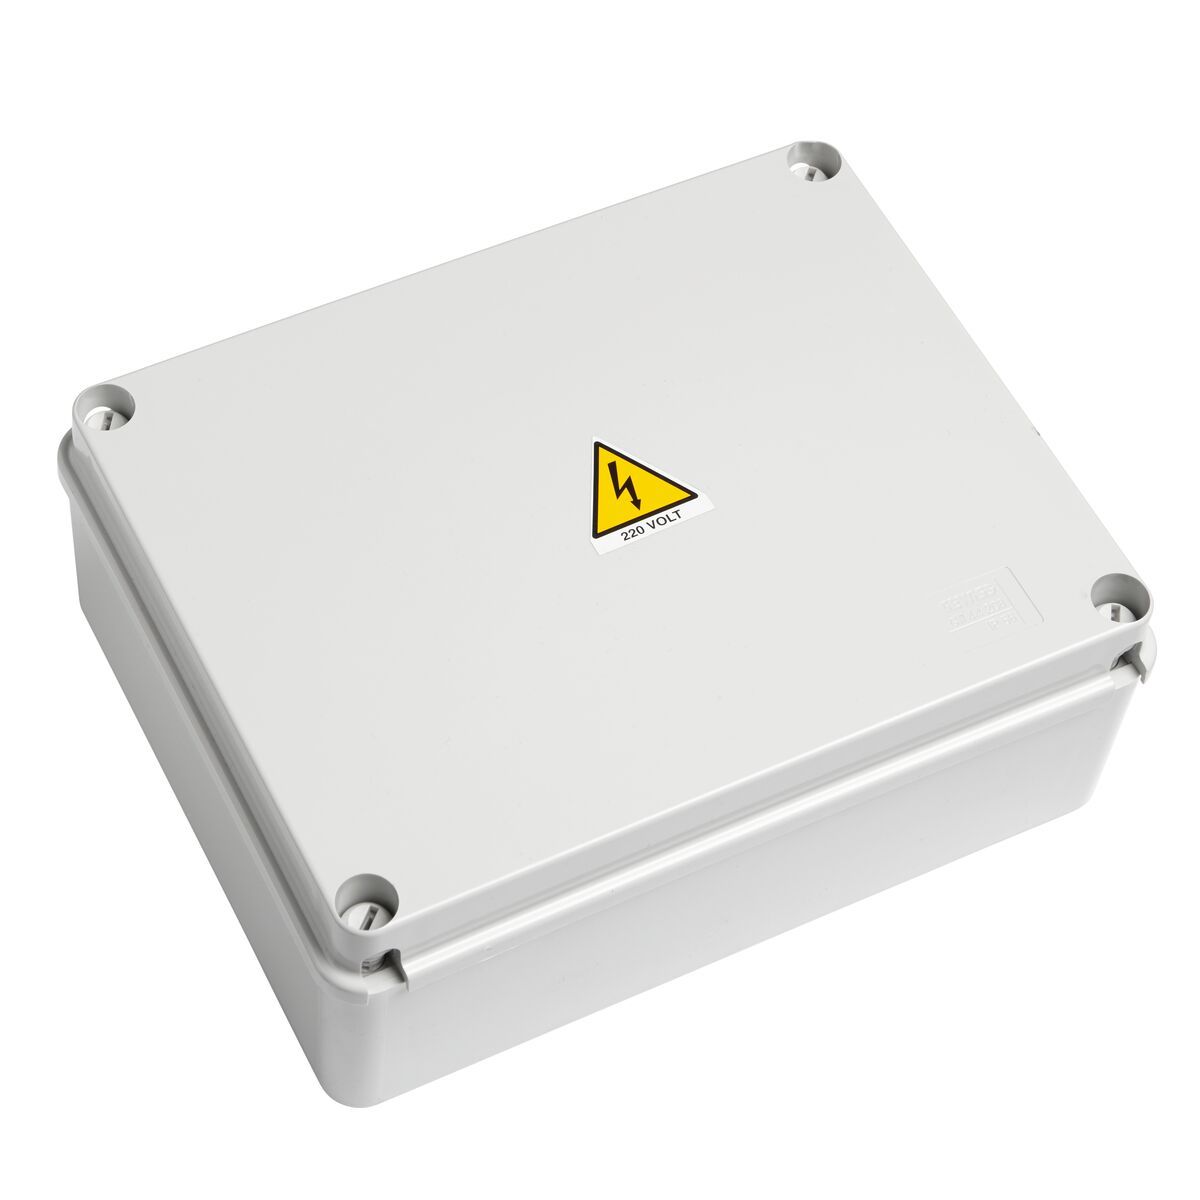 Vogel's PPA 906 Smart box per PPL 2500 - Product